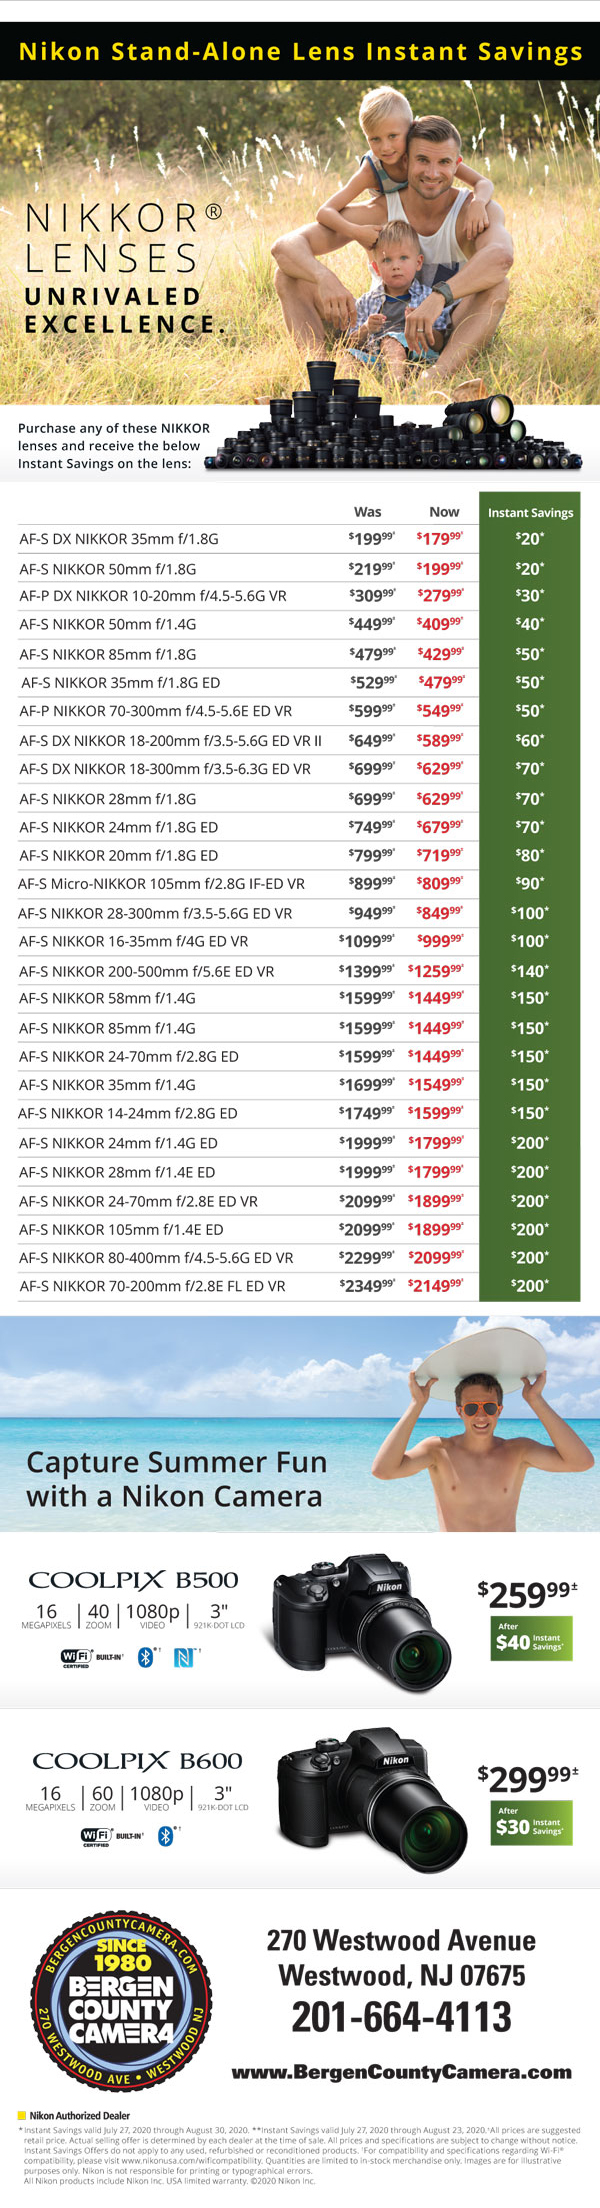 Nikon Stand-Alone Lens Instant Savings - AF-S DX Nikkor 35mm f/1.8 was $199.99 now $179.99 instant savings $20 - Nikkor 50mm f/1.8 was $219.99 now $199.99 instant savings $20 - DX Nikkor 10-20mm f/4.5-5.6 was $309.99 now $279.99 instant savings $30 - Nikkor 50mm f/1.4 was $449.99 now $409.99 instant savings $20 - Nikkor 85mm f/1.4 was $479.99 now $429.99 instant savings $50 - Nikkor 35mm f/1.8 was $529.99 now $479.99 instant savings $50 - Nikkor 70-300mm f/4.5-5.6 was $599.99 now $549.99 instant savings $50 - DX Nikkor 18-200mm f/3.5-5.6 was $649.99 now $589.99 instant savings $60 - DX Nikkor 18-300 f/3.5-6.3 was $699.99 now $629.99 instant savings $70 - Nikkor 28mm f/1.8 was $699.99 now $629.99 instant savings $70 - Nikkor 24mm f/1.8 was $749.99 now $679.99 instant savings $70 - Nikkor 20mm f/1.8 was $799.99 now $719.99 instant savings $80 - Micro-Nikkor 105mm f/2.8 was $899.99 now $809.99 instant savings $90 - Nikkor 28-300mm f/3.5-5.6 was $949.99 now $849.99 instant savings $100 - Nikkor 16-35mm f/4 was $1099.99 now $999.99 instant savings $100 - Nikkor 200-500mm f/5.6 was $1399.99 now $1259.99 instant savings $140 - Nikkor 58mm f/1.4 was $1599.99 now $1449.99 instant savings $150 - Nikkor 85mm f/1.4 was $1599.99 now $1449.99 instant savings $150 - Nikkor 24-70 f/2.8 was $1599.99 now $1449.99 instant savings $150 - Nikkor 35mm f/1.4 was $1699.99 now $1549.99 instant savings $150 - Nikkor 14-24 f/2.8 was $1749.99 now $1599.99 instant savings $150 - Nikkor 24mm f/1.4G ED was $1999.99 now $1799.99 instant savings $200 - Nikkor 28mm f/1.4E ED was $1999.99 now $1799.99 instant savings $200 - Nikkor 24-70 f/2.8 ED VR was $2099.99 now $1899.99 instant savings $200 - Nikkor 105mm f/1.4 wsa $2099.99 now $1899.99 instant savings $200 - Nikkor 80-400mm f/4.5-5.6 was $2299.99 now $2099.99 instant savings $200 - Nikkor 70-200 f/2.8 was $2349.99 now $2149.99 instant savings $200 - Coolpix B500 $259.99 after $40 instant savings - Coolpix B600 $299.99 after $30 instant savings